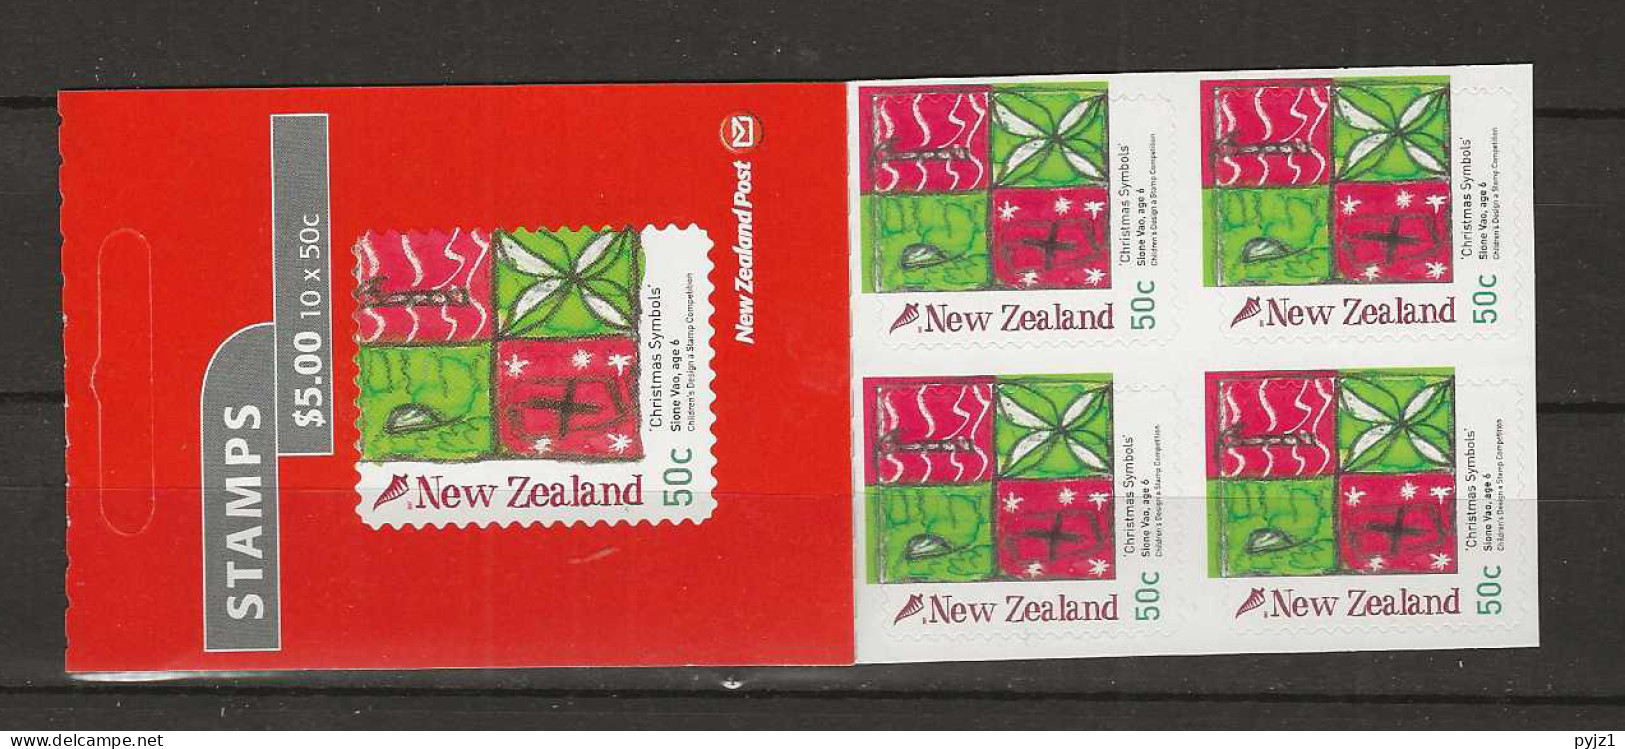 2007 MNH New Zealand Booklet Mi 2462 Postfris** - Markenheftchen